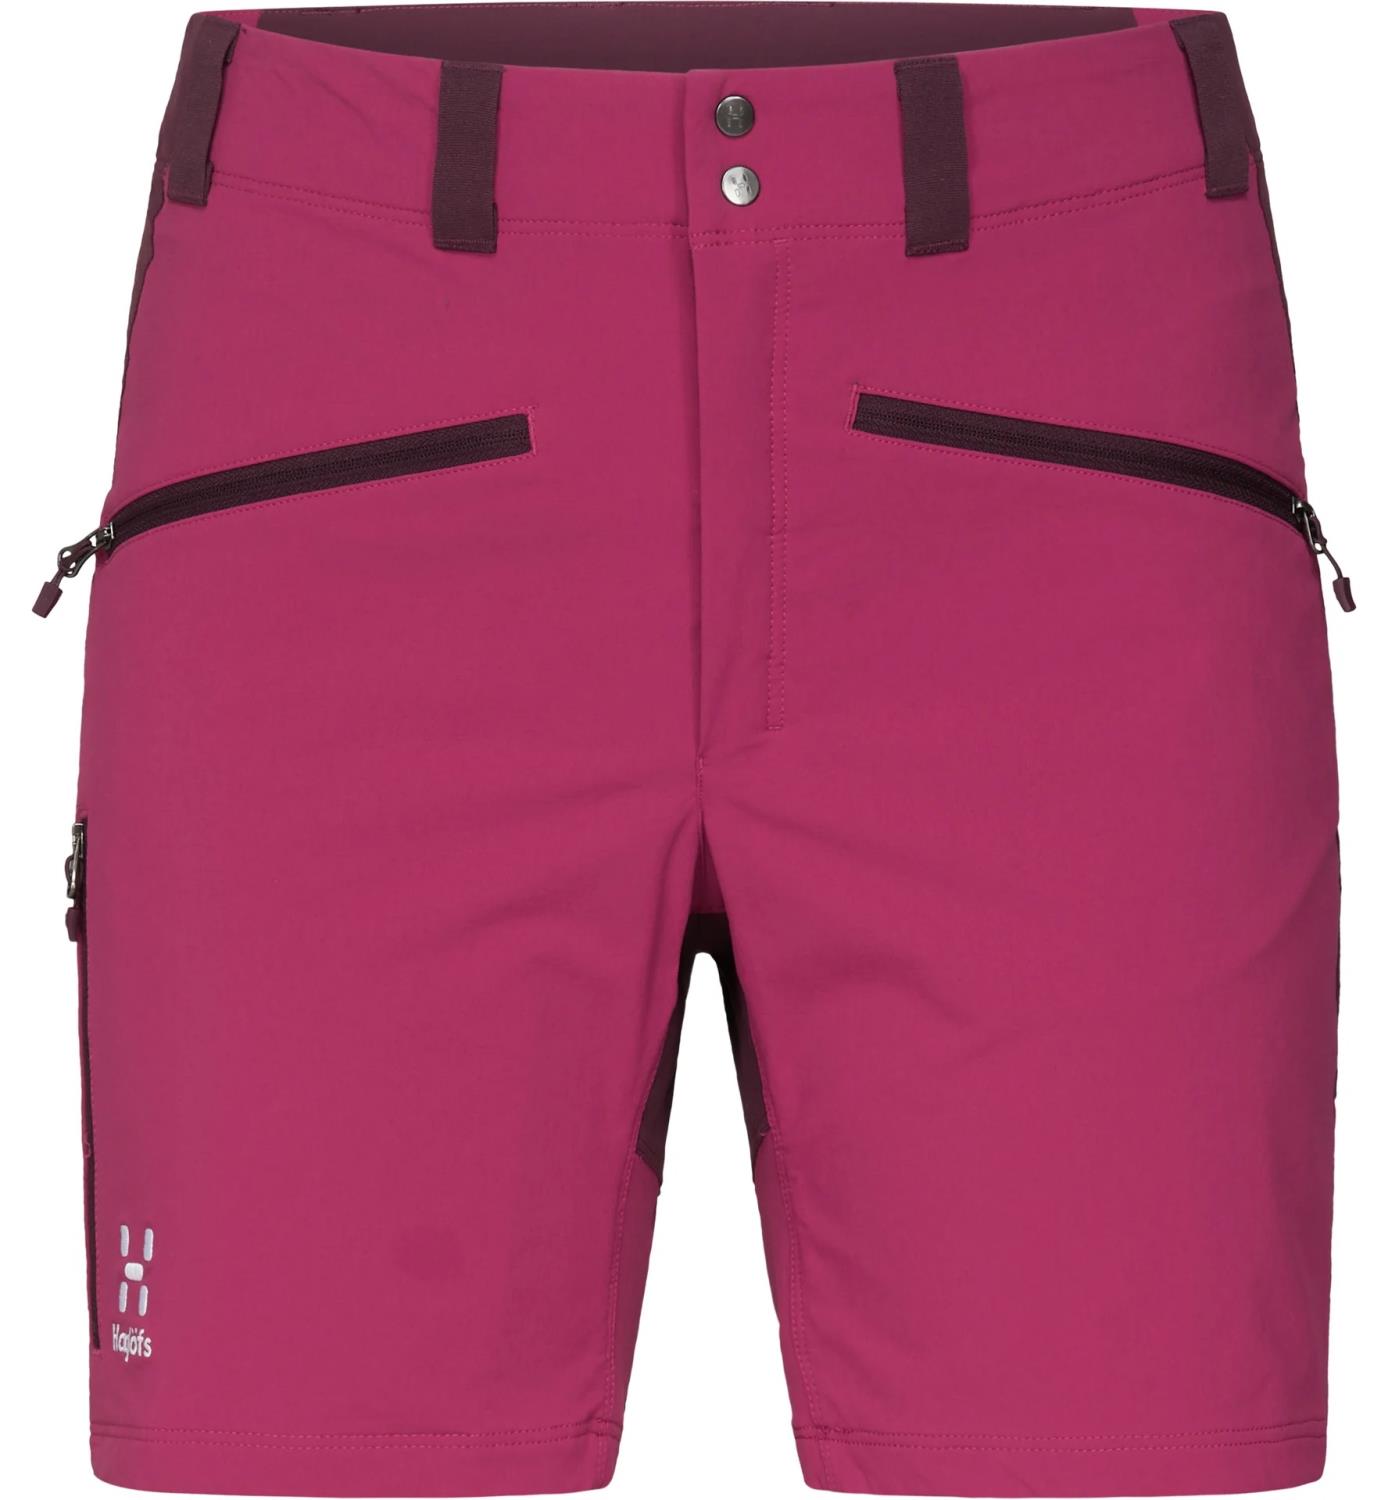 Hagløfs Mid Standard Shorts Women Deep Pink/Aubergine